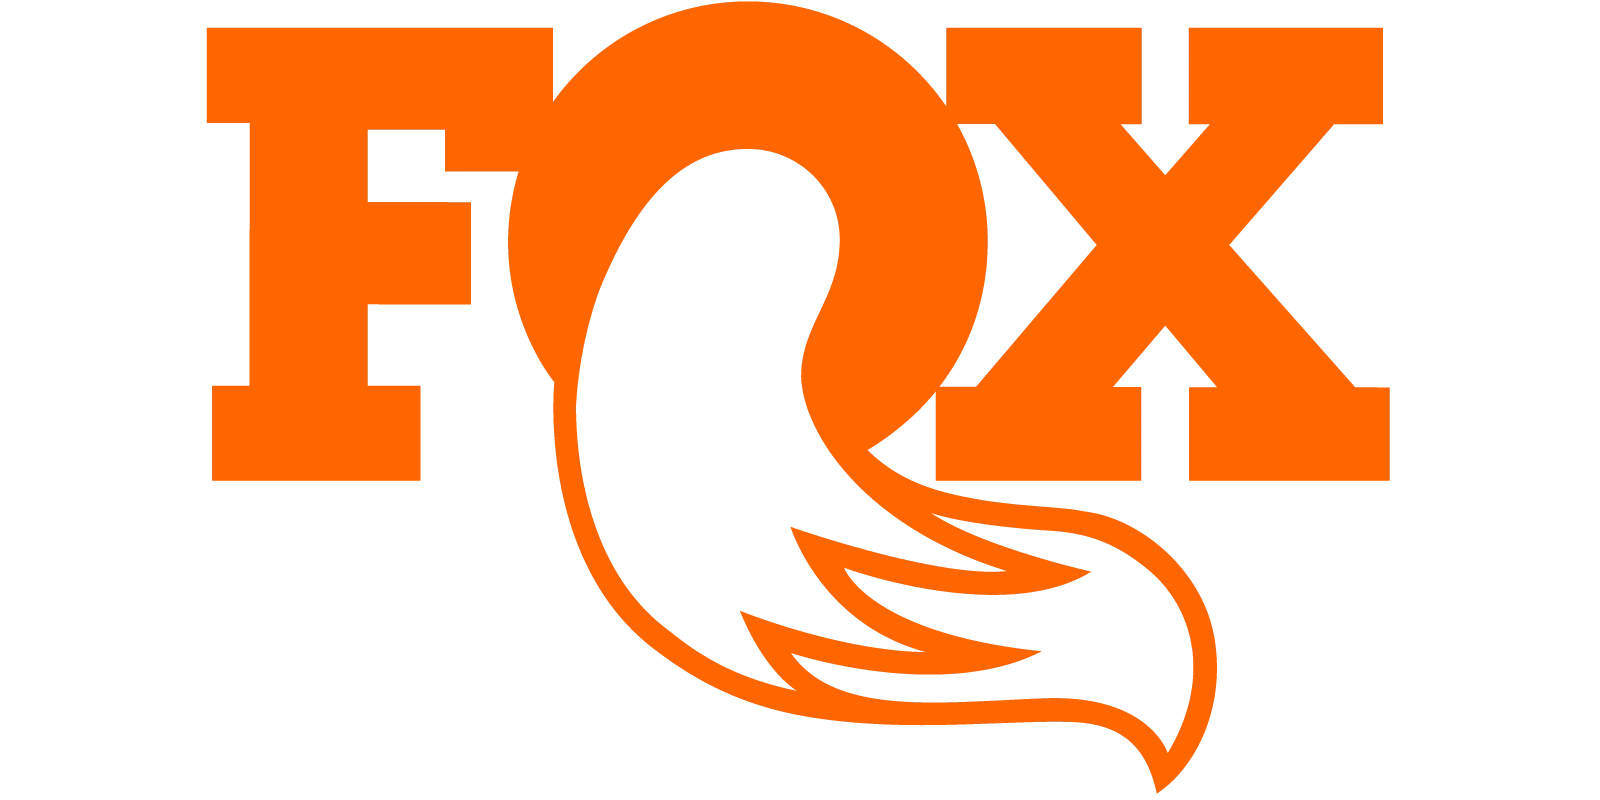 Fox Factory